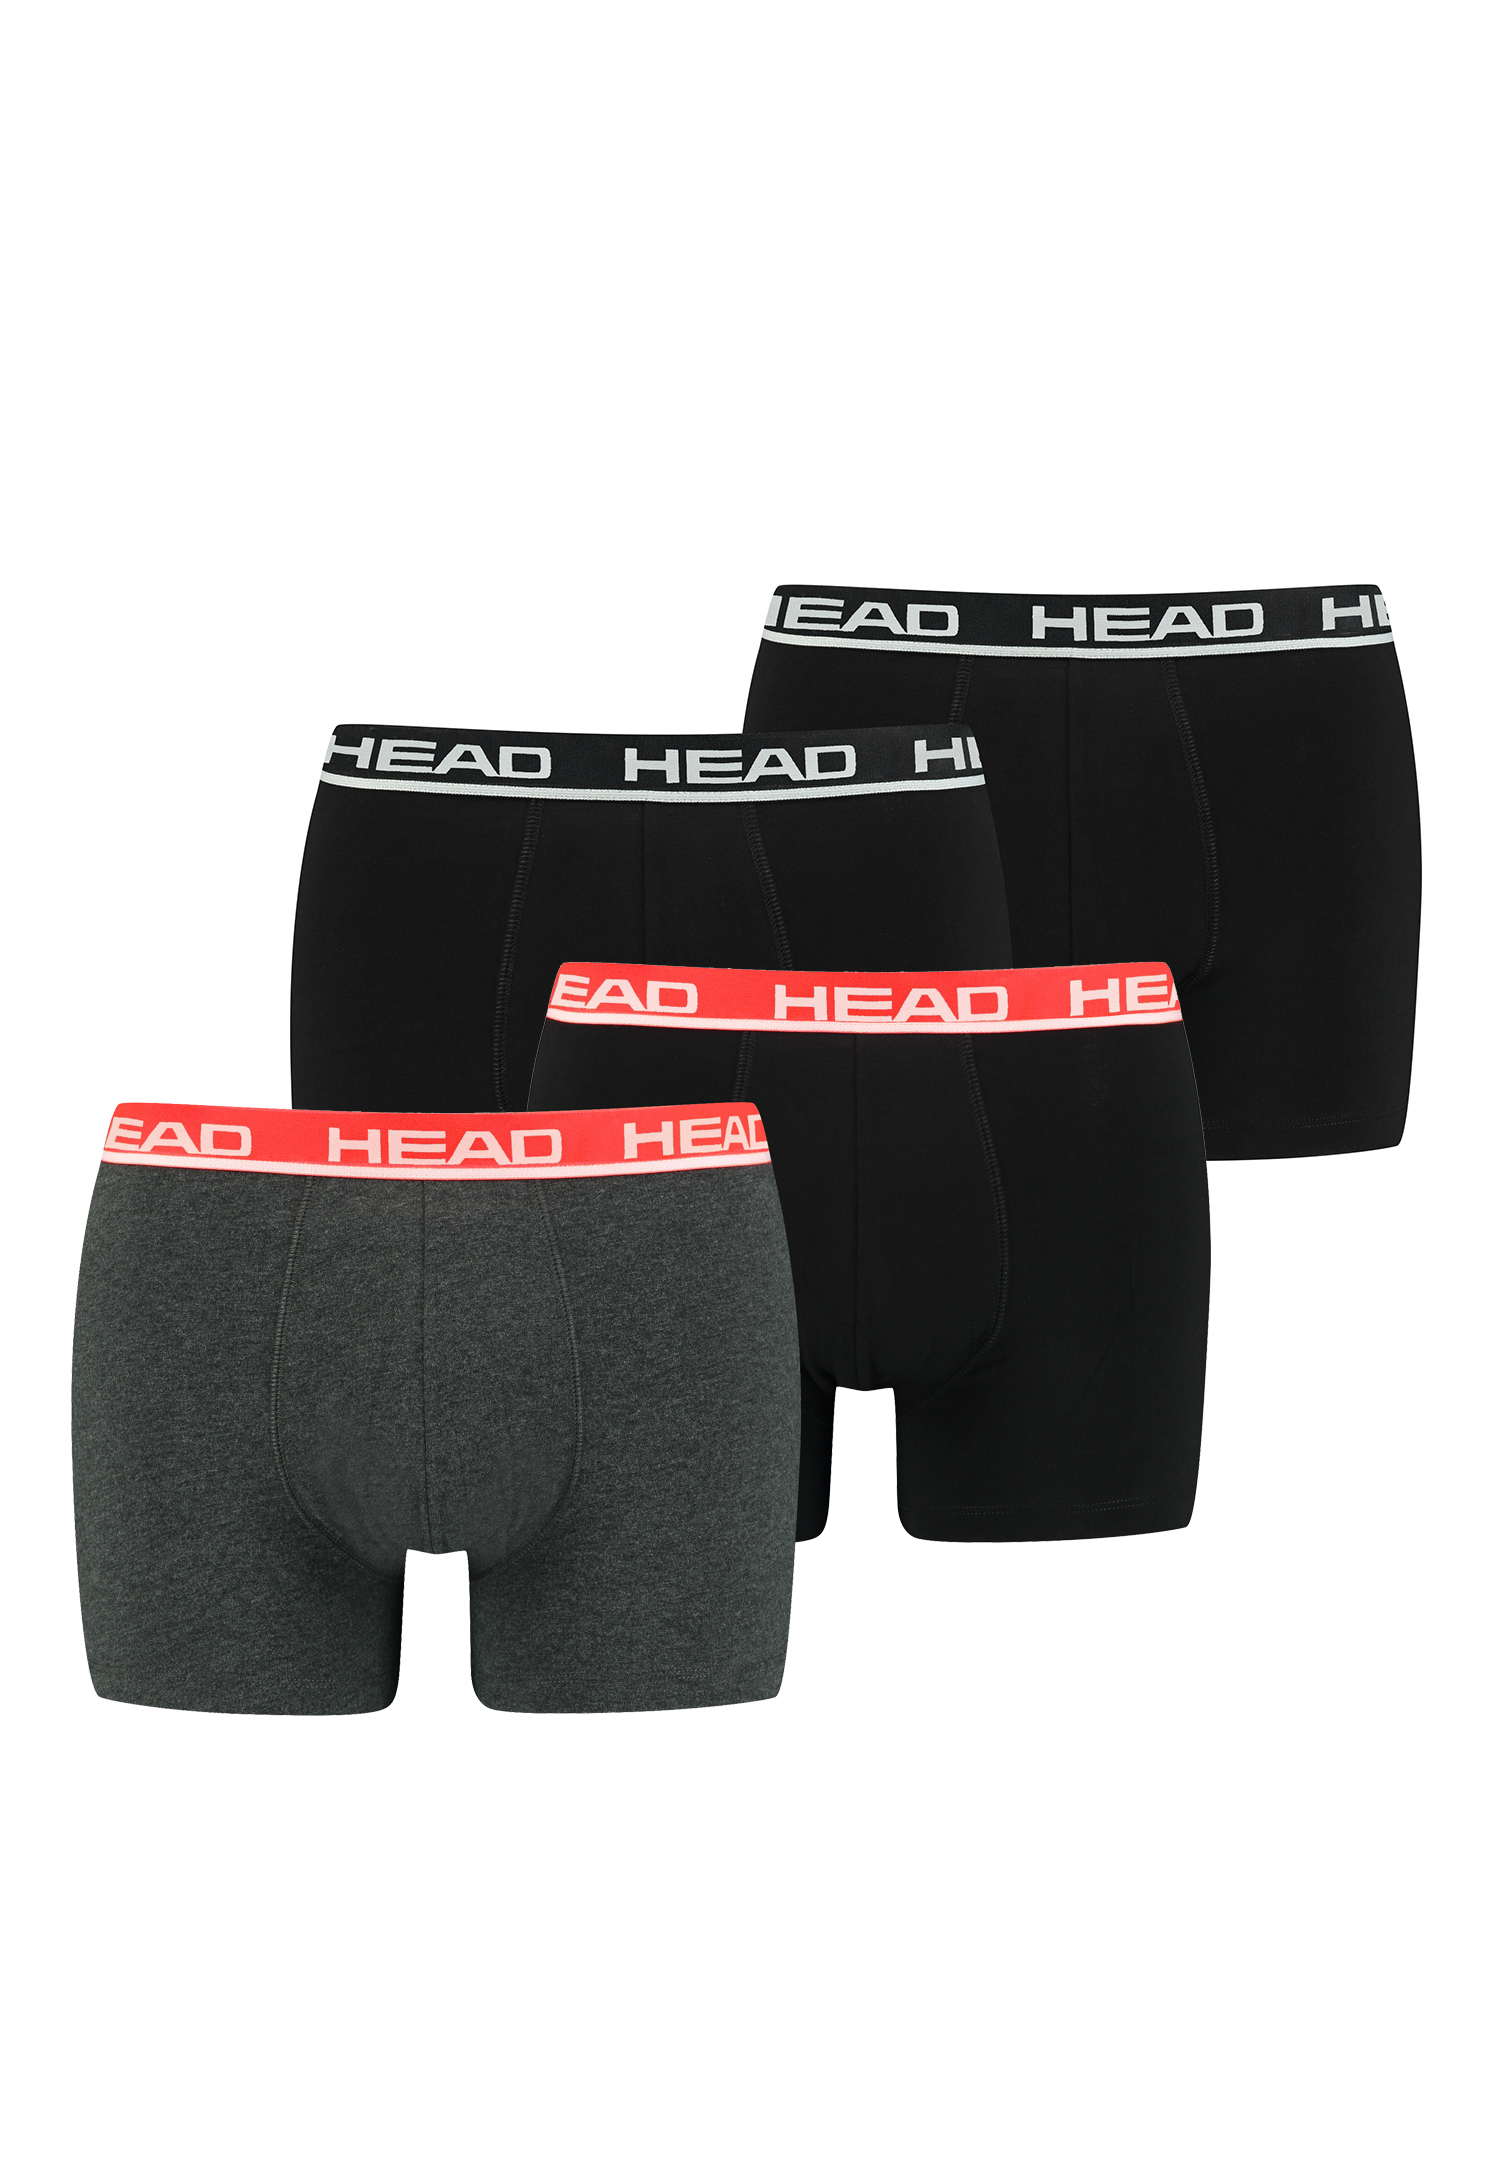 HEAD Herren Boxershorts Unterhosen 4P (Black/Grey Red, S)